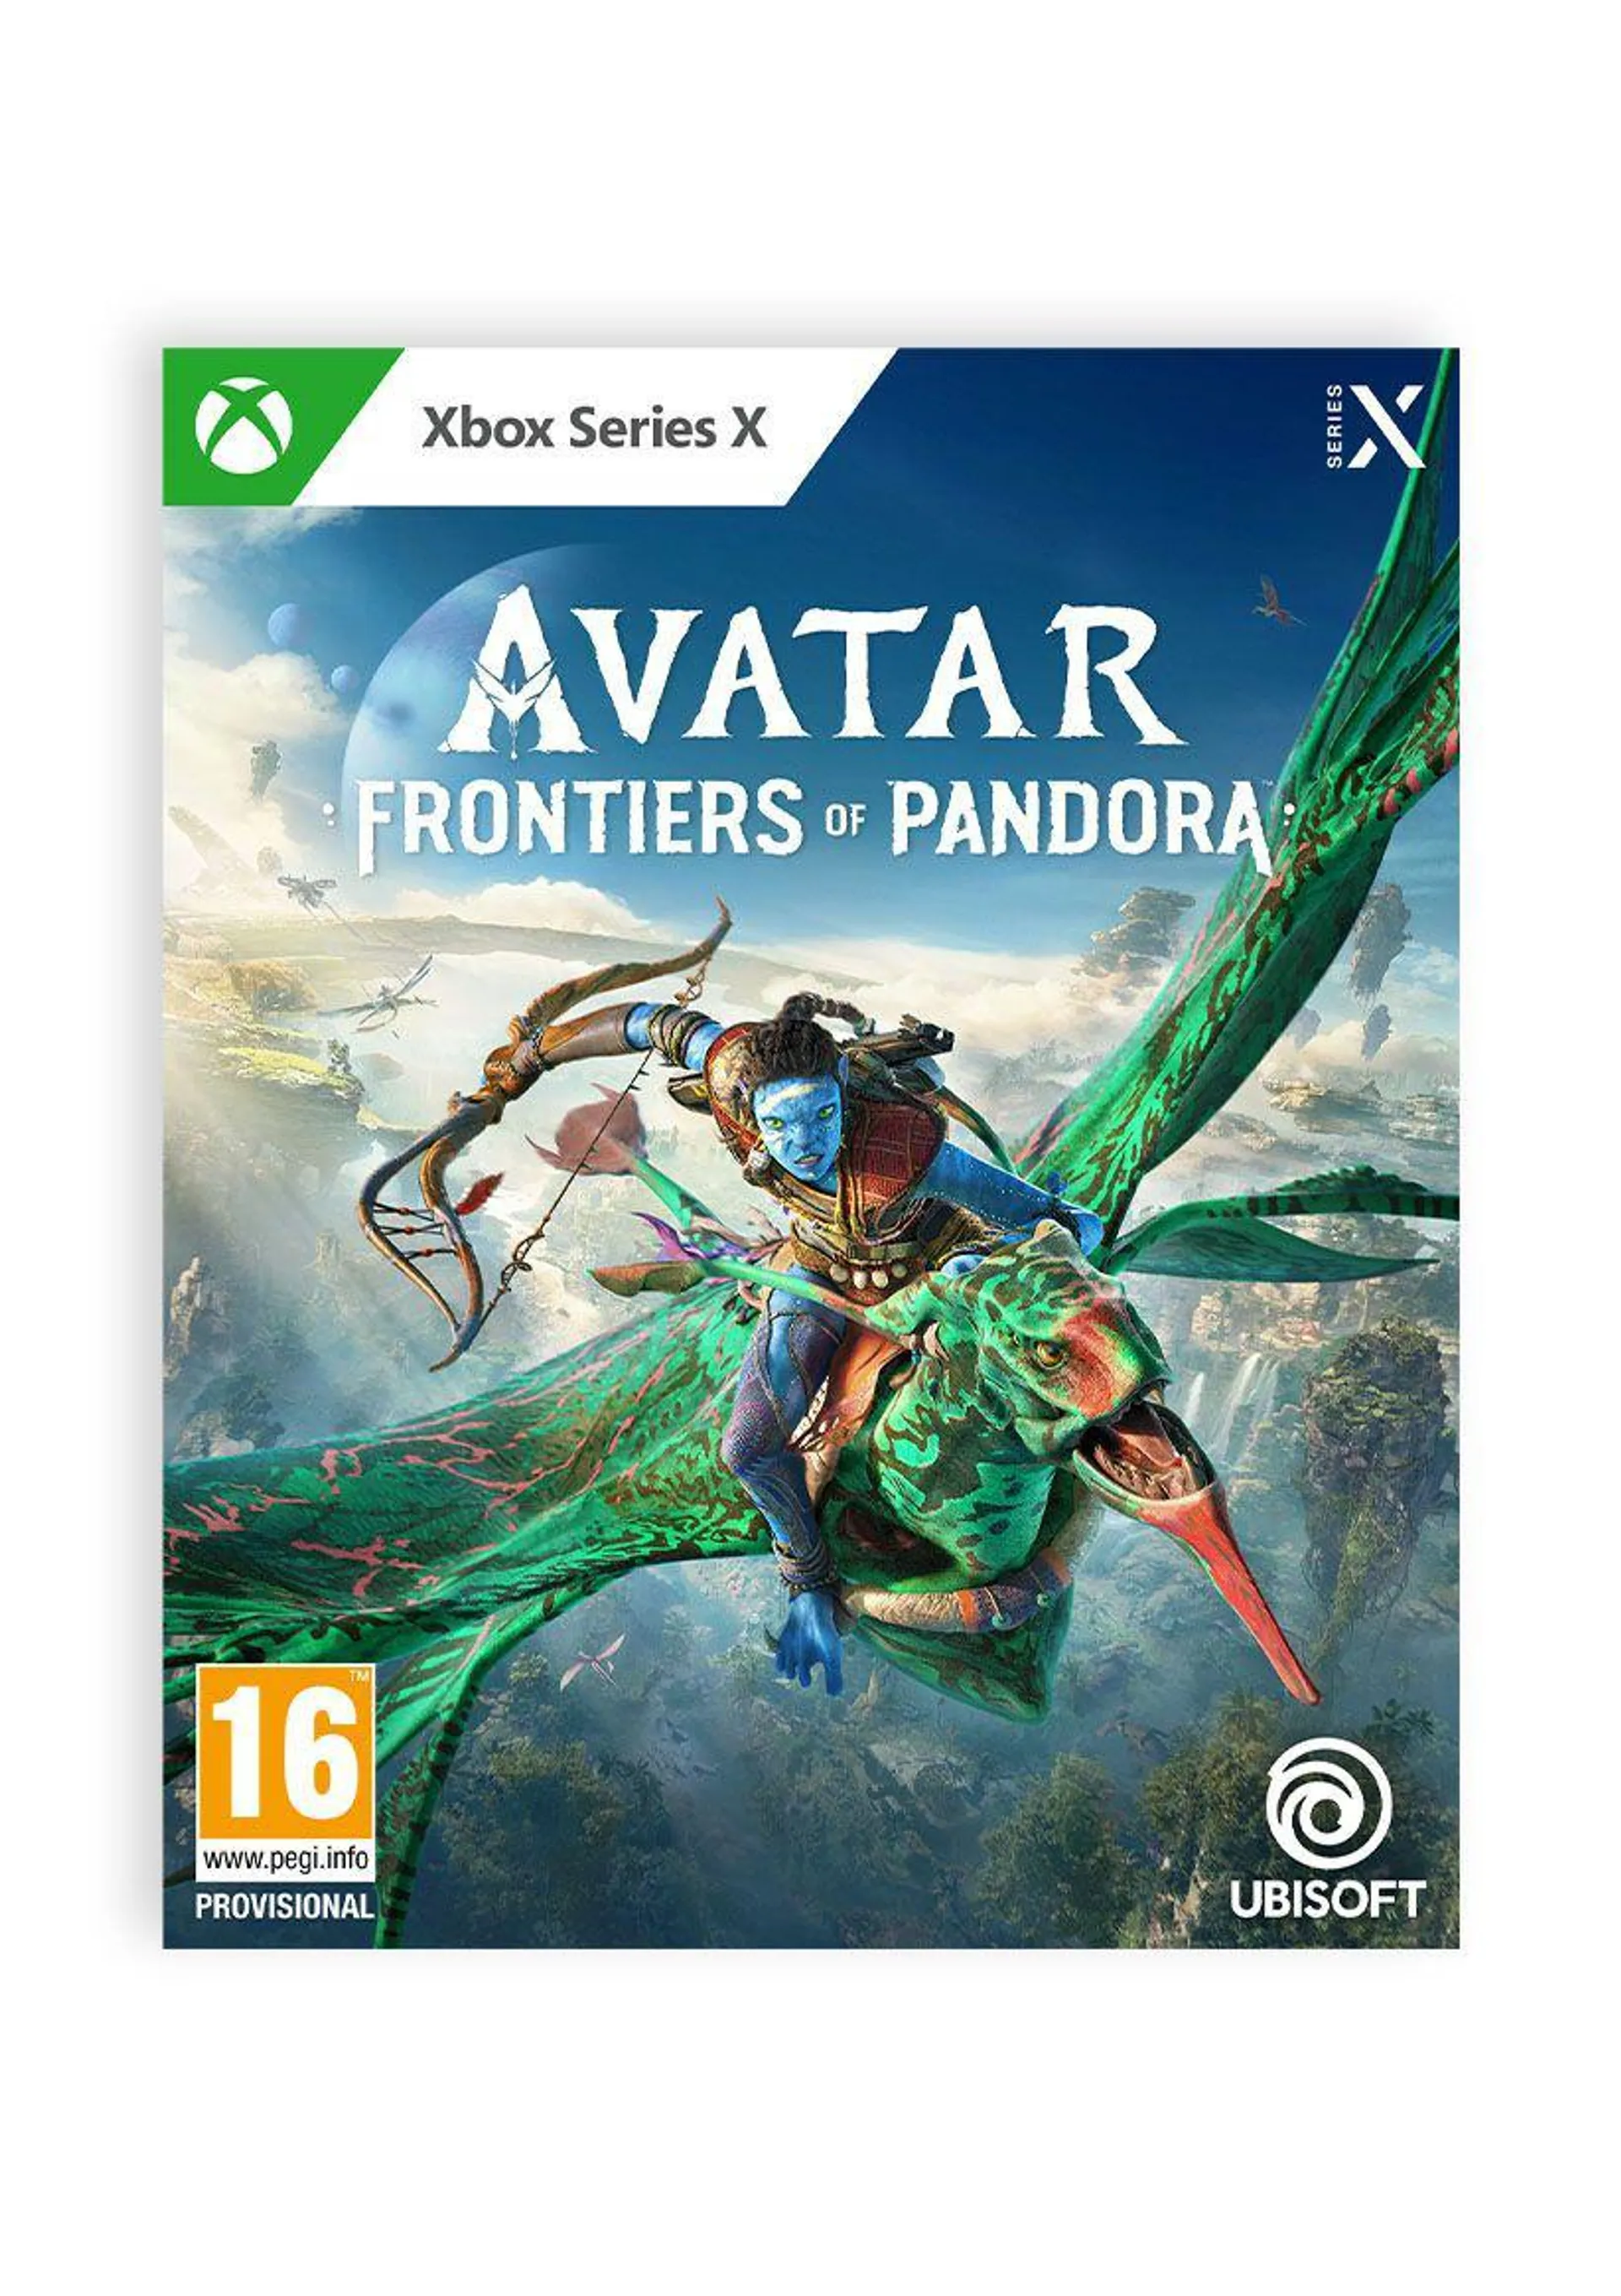 Avatar: Frontiers of Pandora on Xbox Series X | S